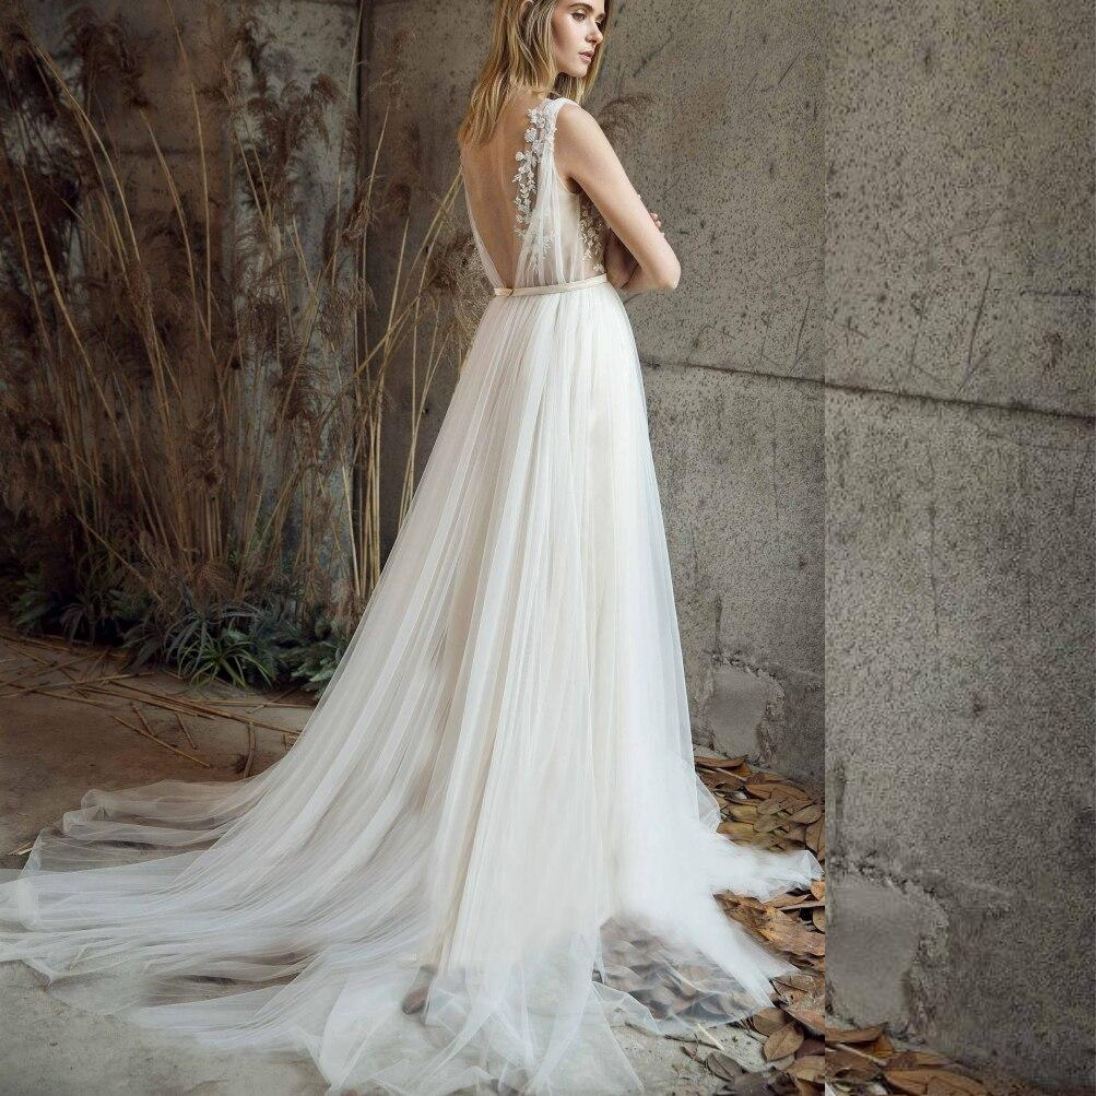 Elegant Vintage Sleeveless Sweep Train O Neck Bridal Gown Vintage Wedding Dresses BlissGown 